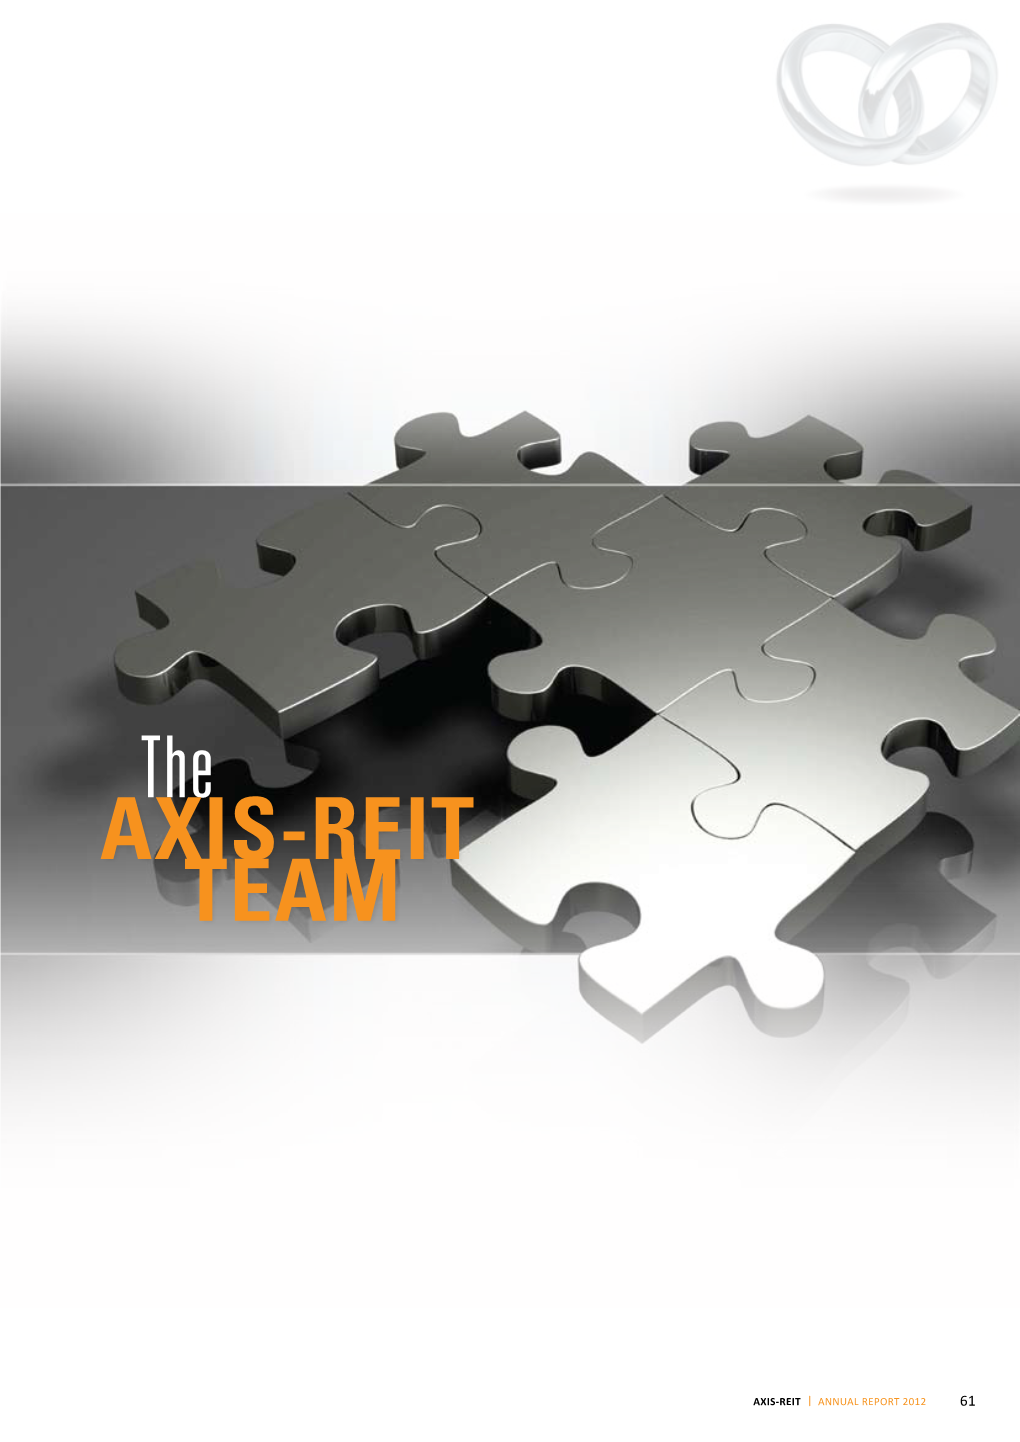 The AXIS-REIT TEAM